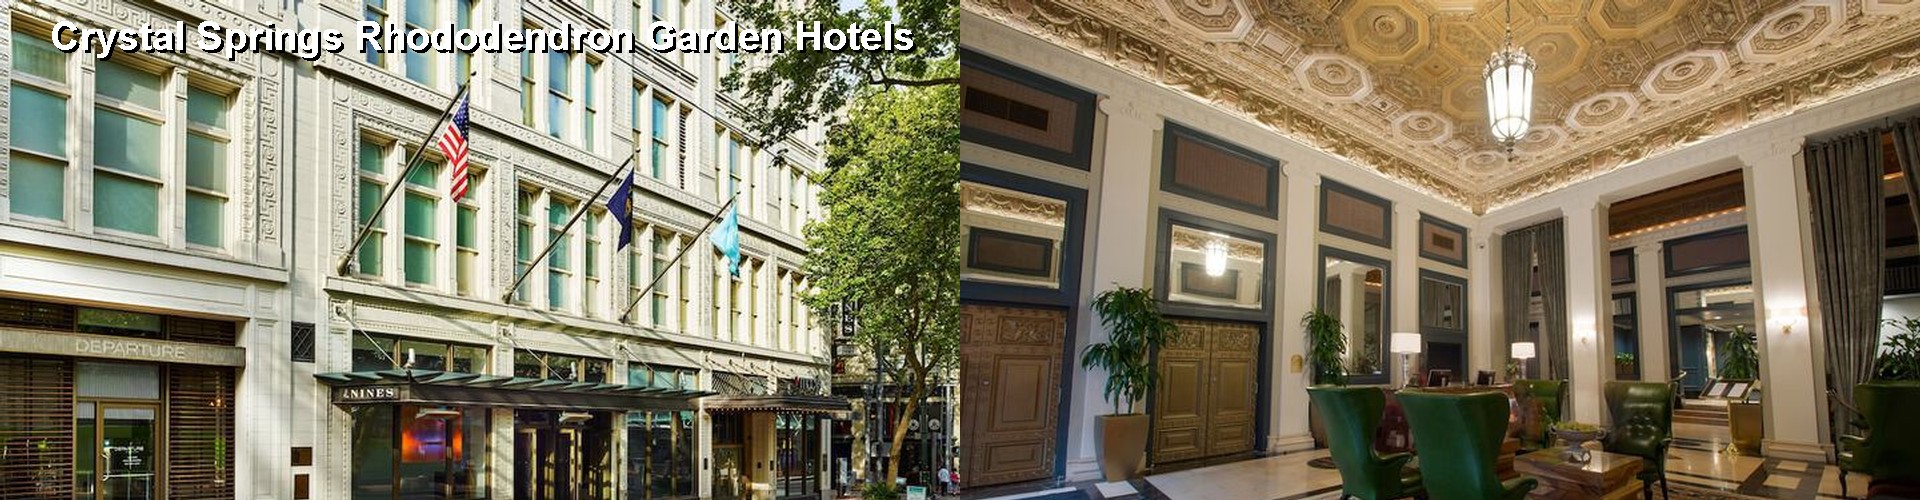 3 Best Hotels near Crystal Springs Rhododendron Garden